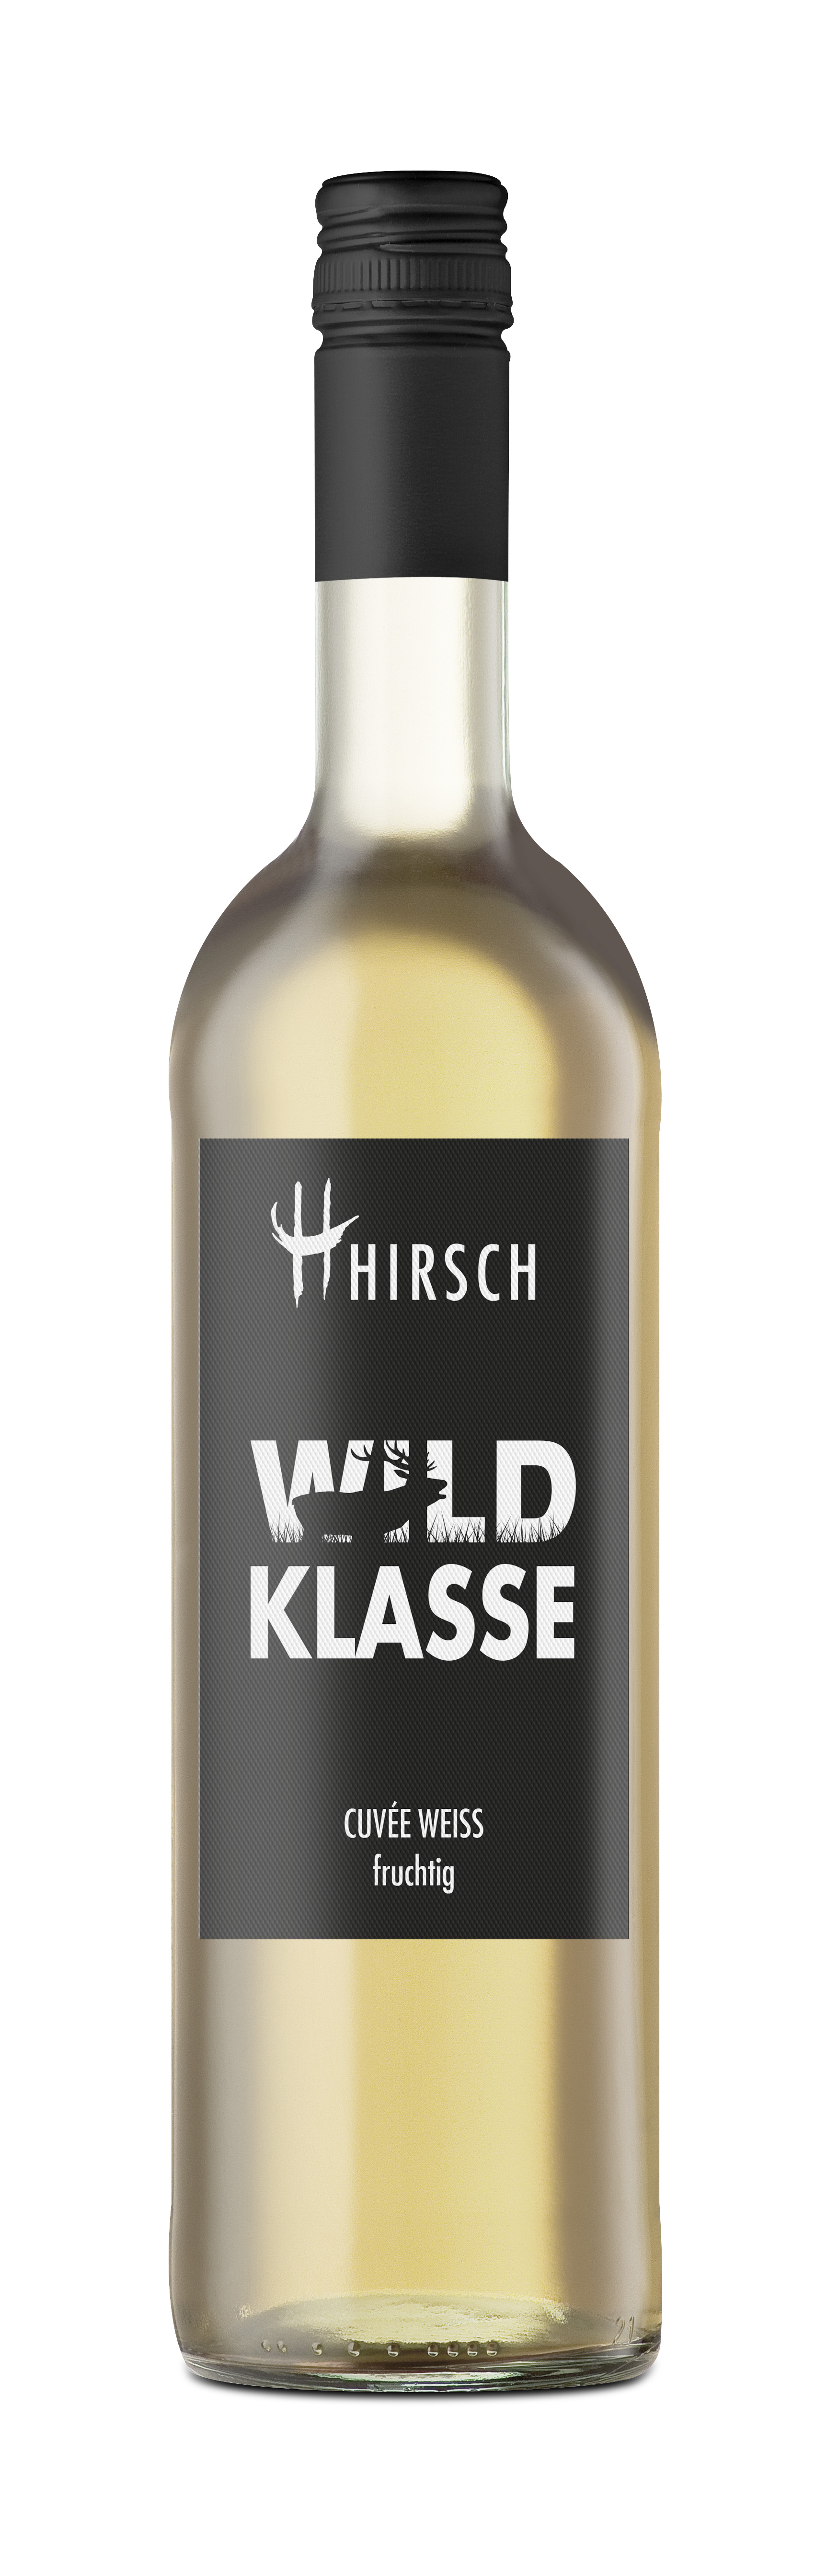 HIrsch "Wildklasse" 2022 Cuvée Weiss fruchtig 0,75 L - Weisswein, halbtrocken, Leingarten, Württemberg